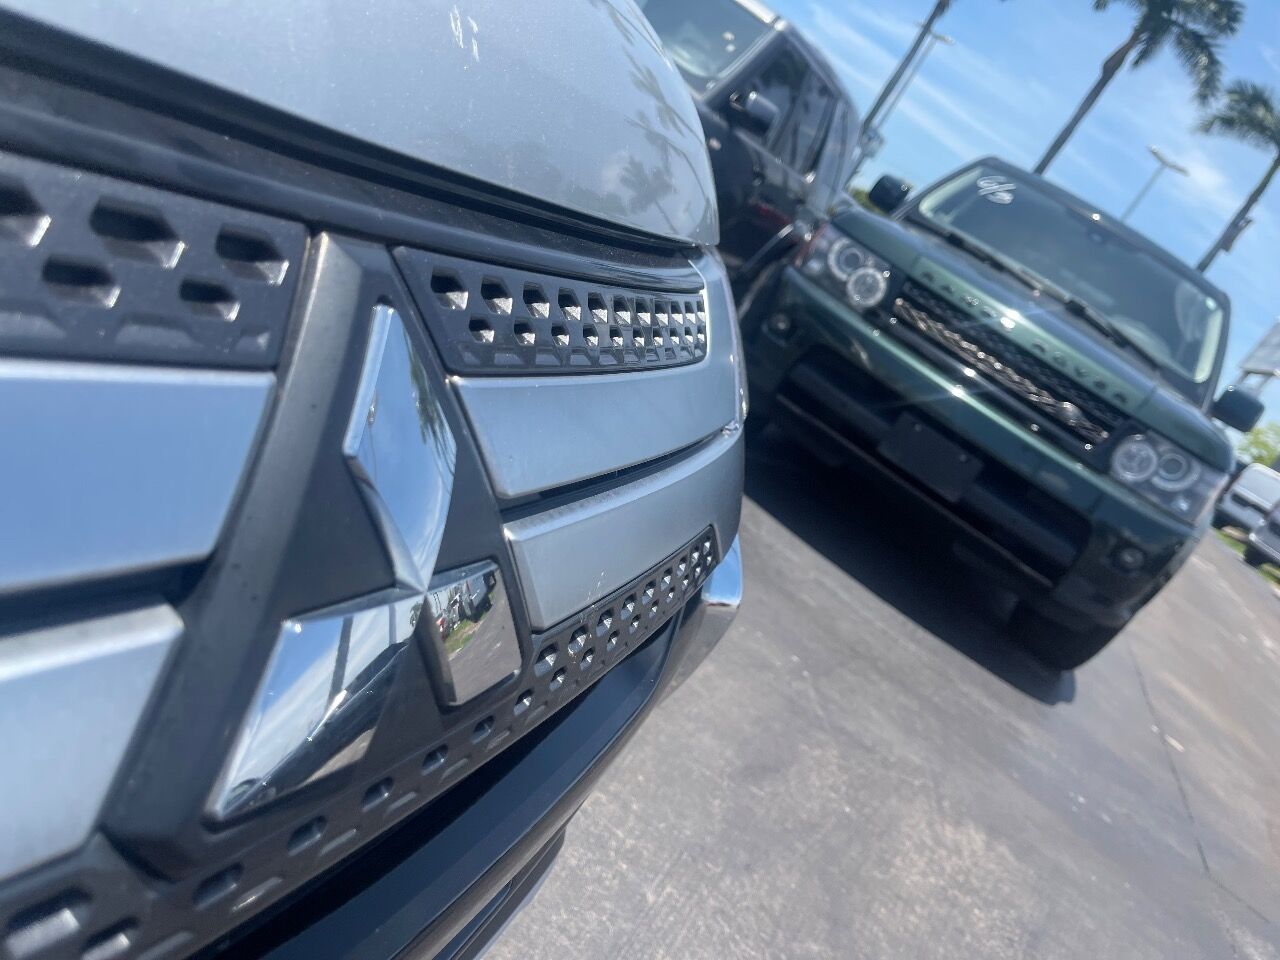 2019 Mitsubishi Outlander SUV / Crossover - $14,900